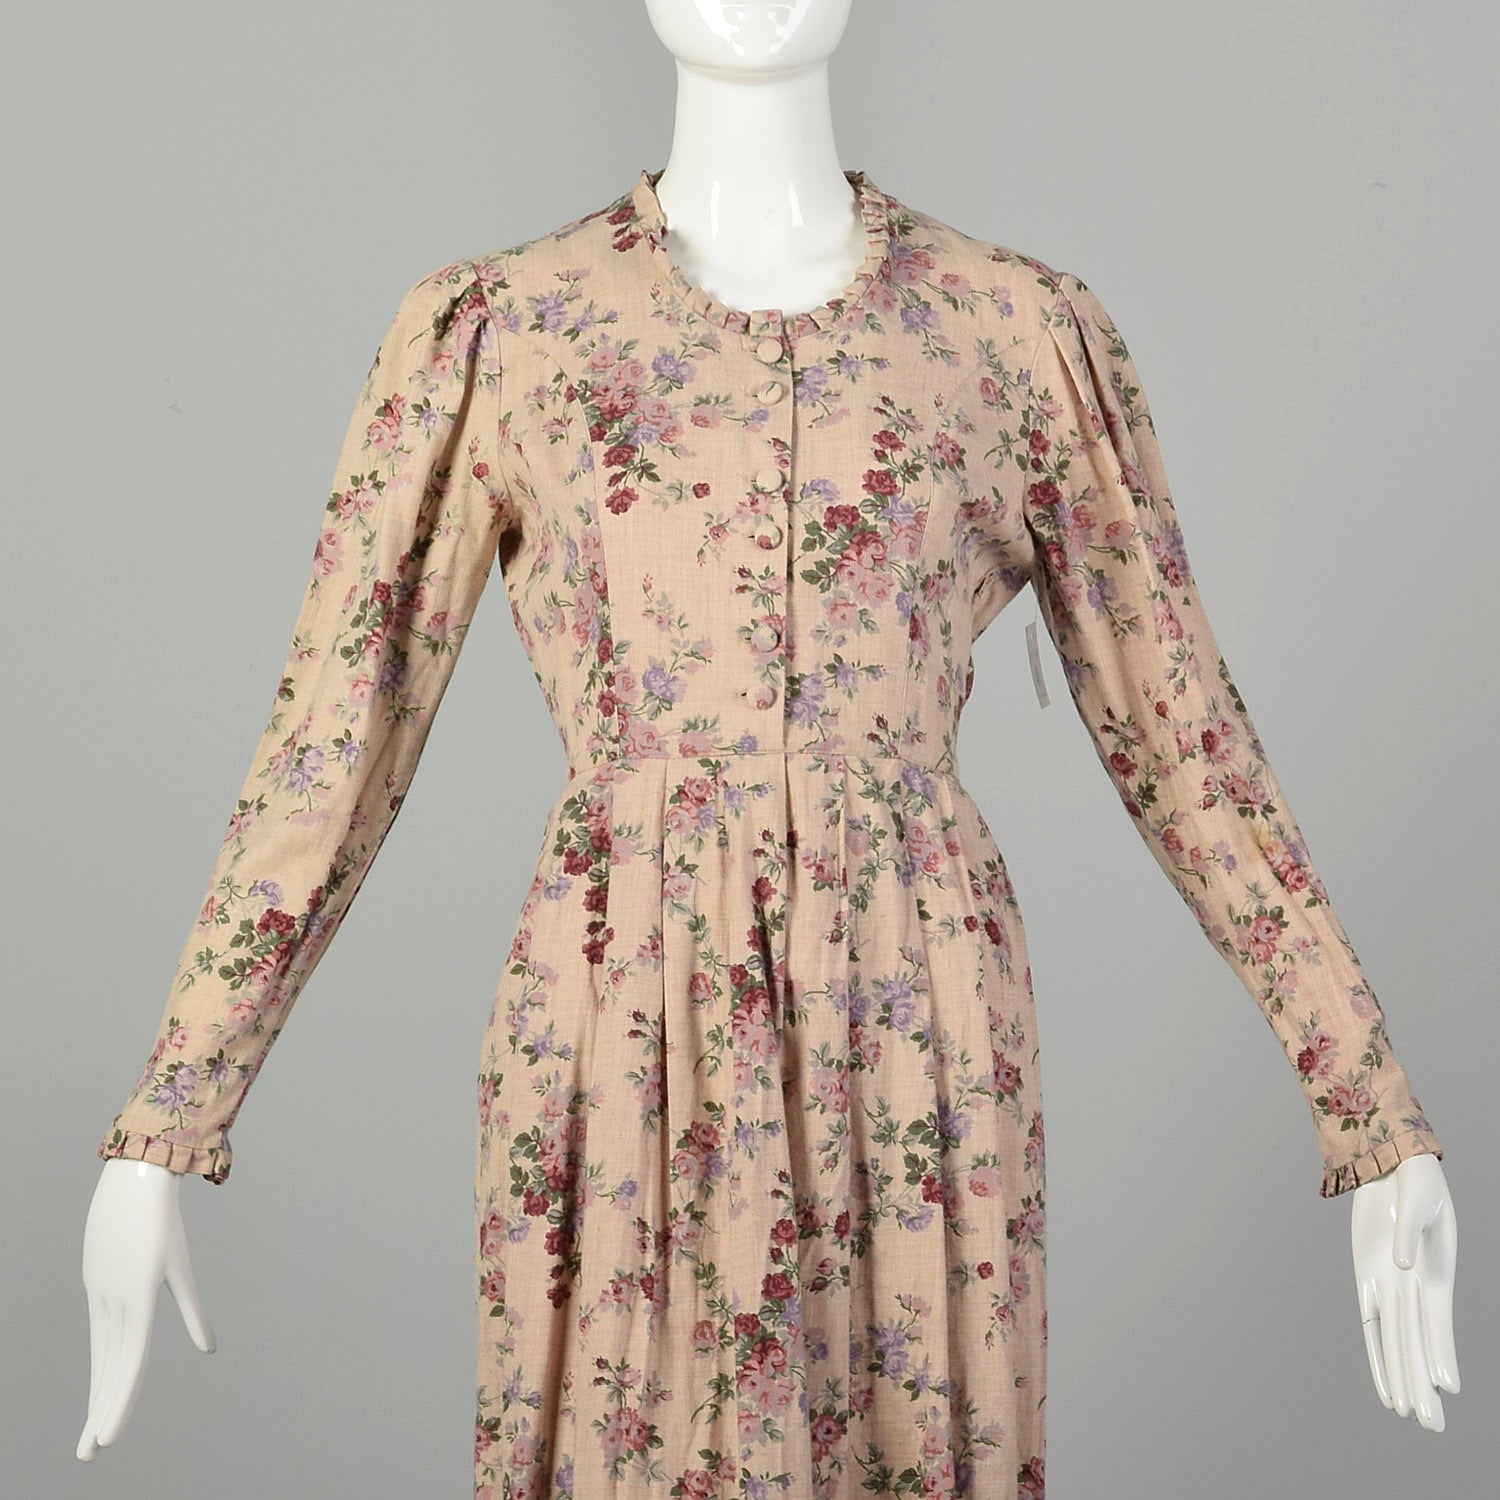 Medium 1990s Laura Ashley Dress Floral Wool Cotton Blend Long